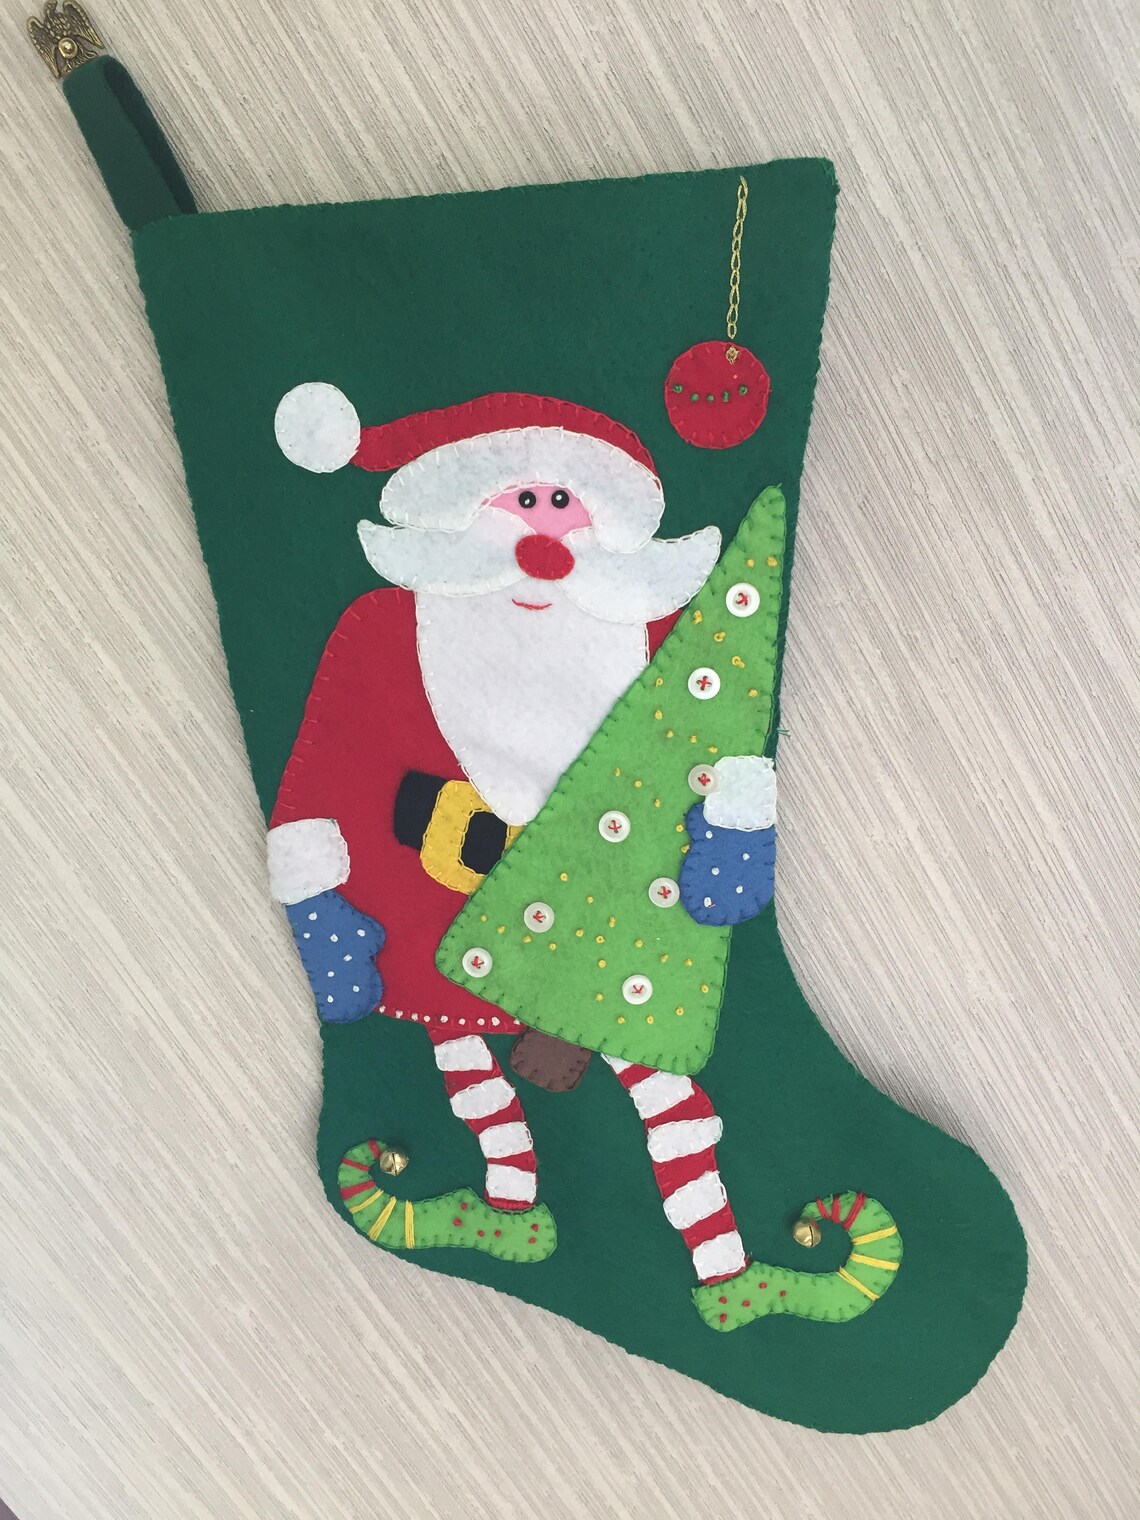 Hippy Santa Handmade Felt Christmas Stocking From Kooler | Etsy